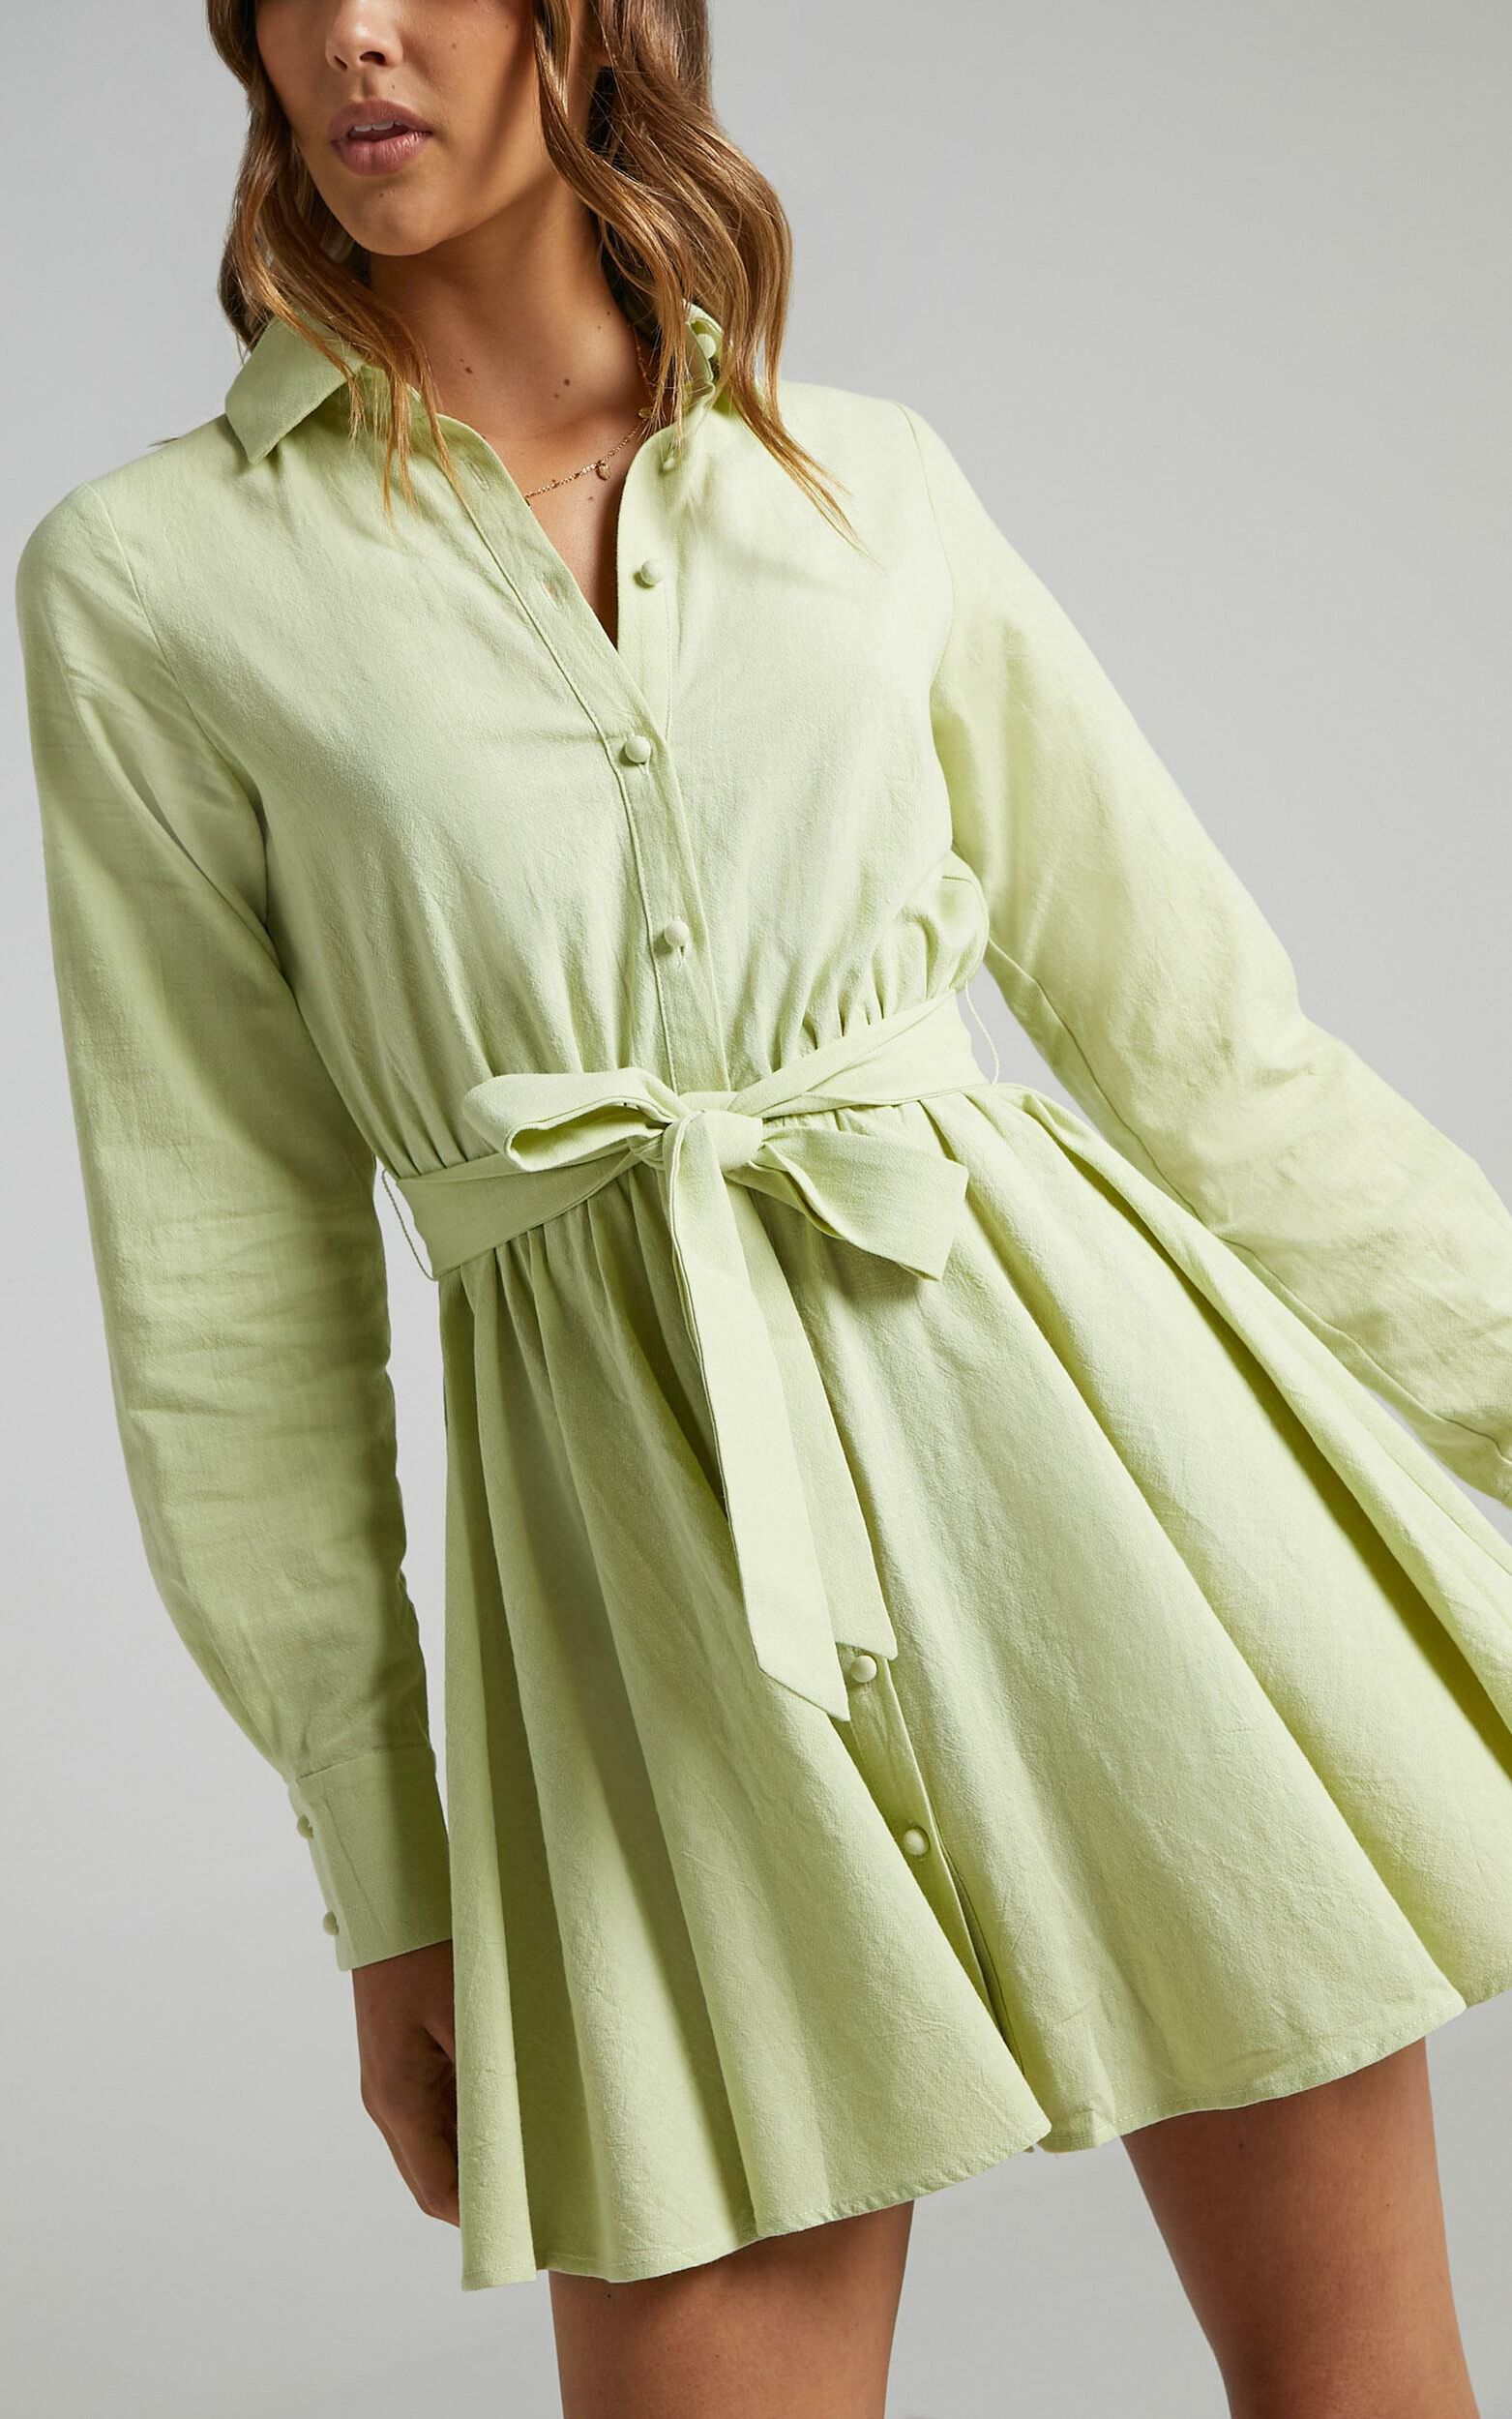 Ciri Dress in Citrus Green - 06, GRN3